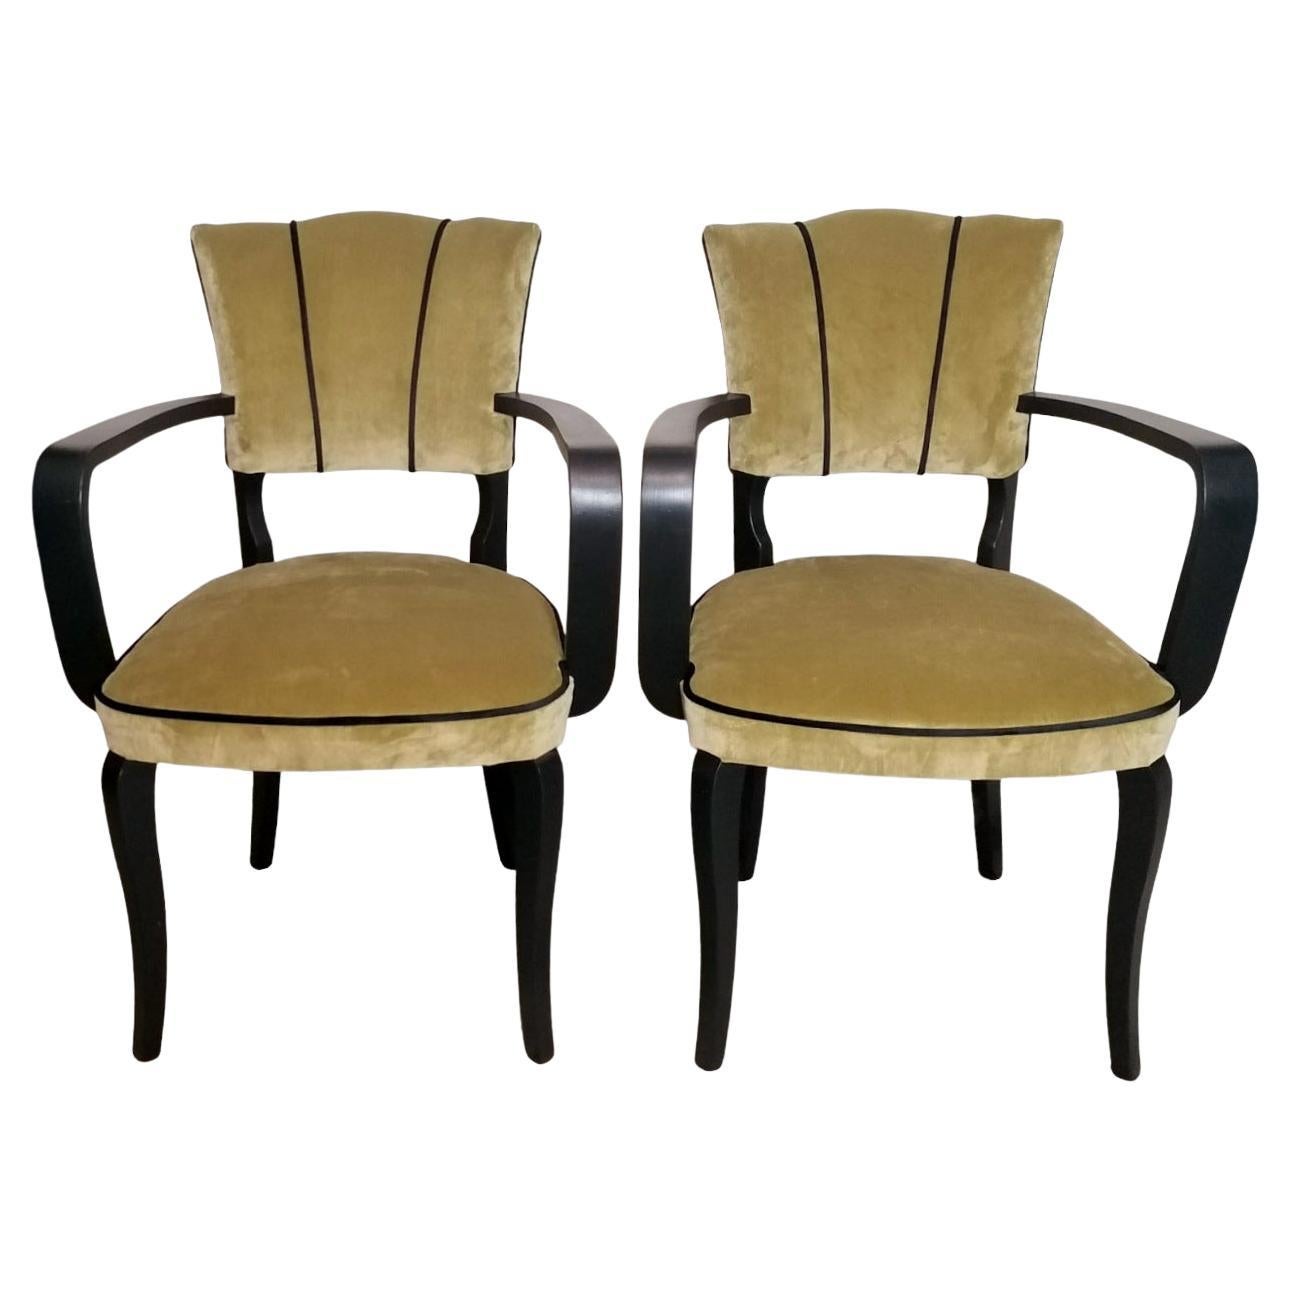 Pair Of French Chairs Model "Bridge"